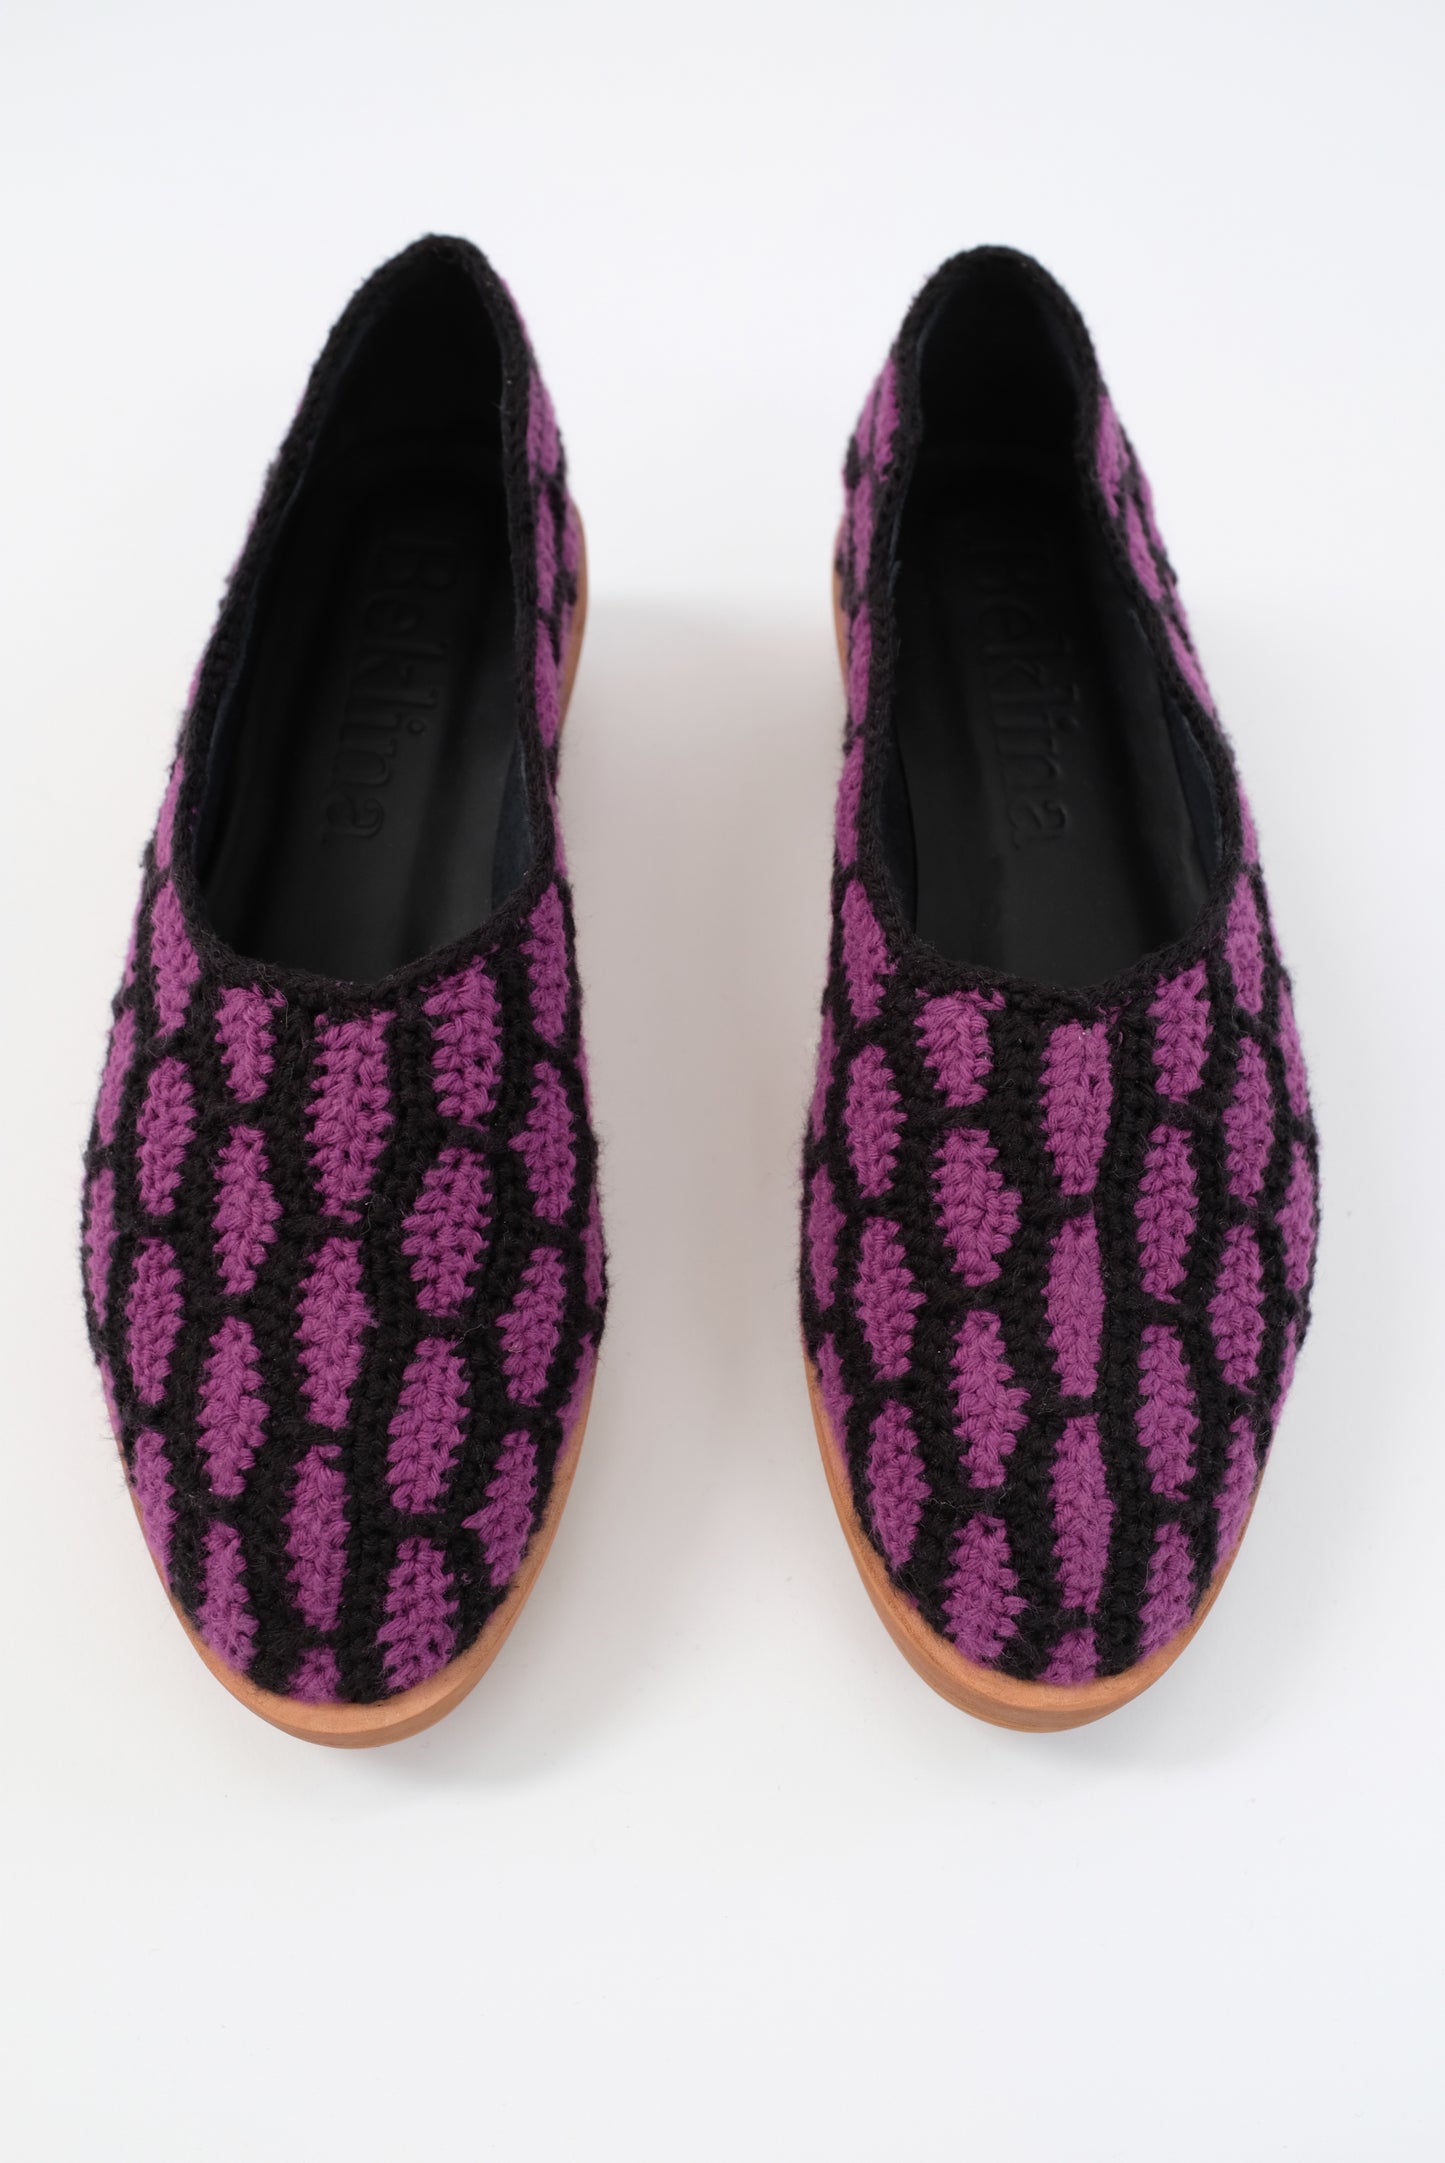 Beklina Aya Crochet Platform Black/Iris